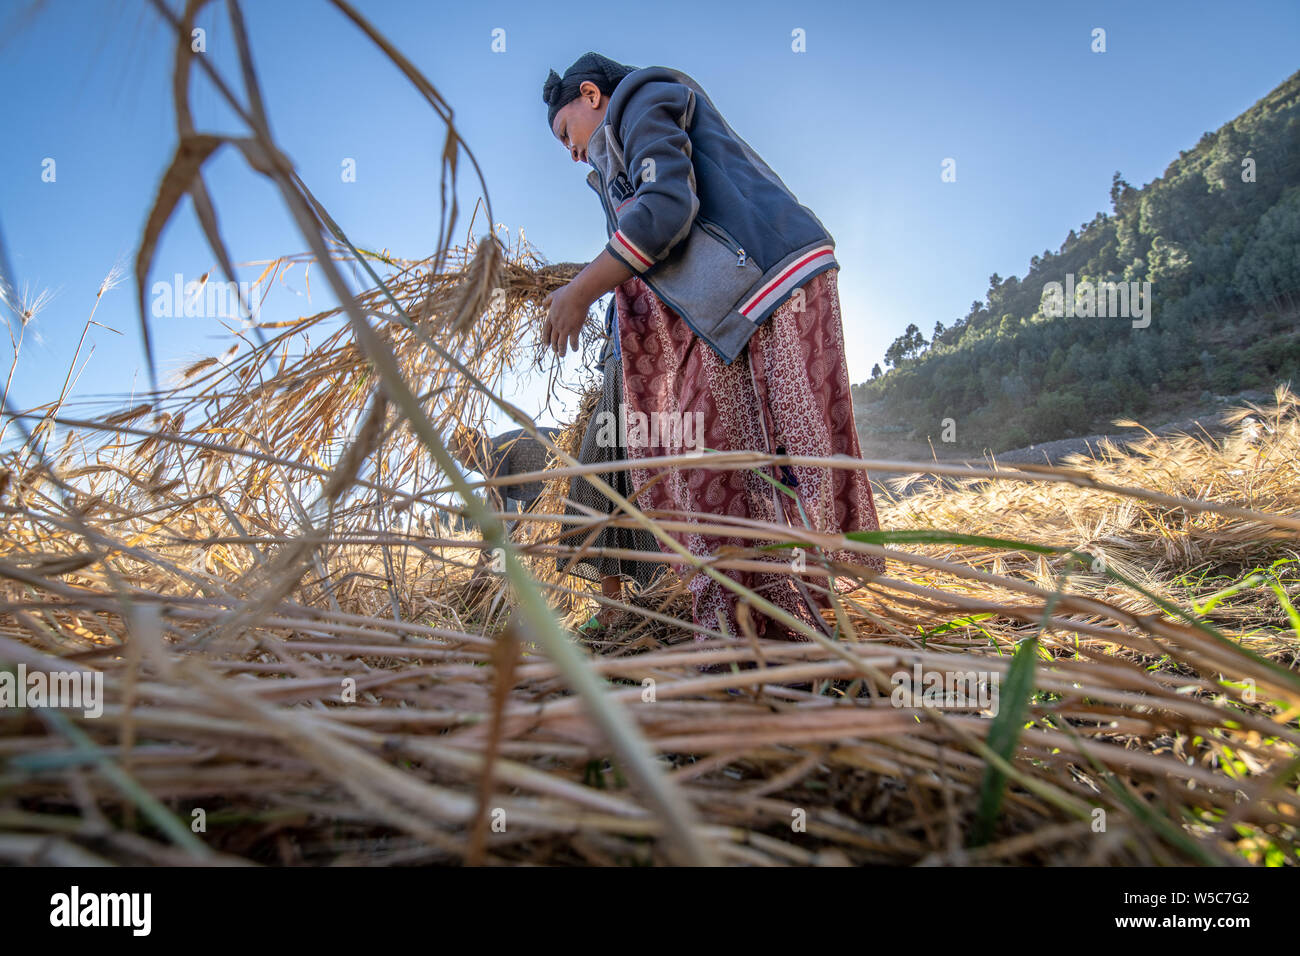 A woman harvesting barley near Ankober, Ethiopia. Stock Photo